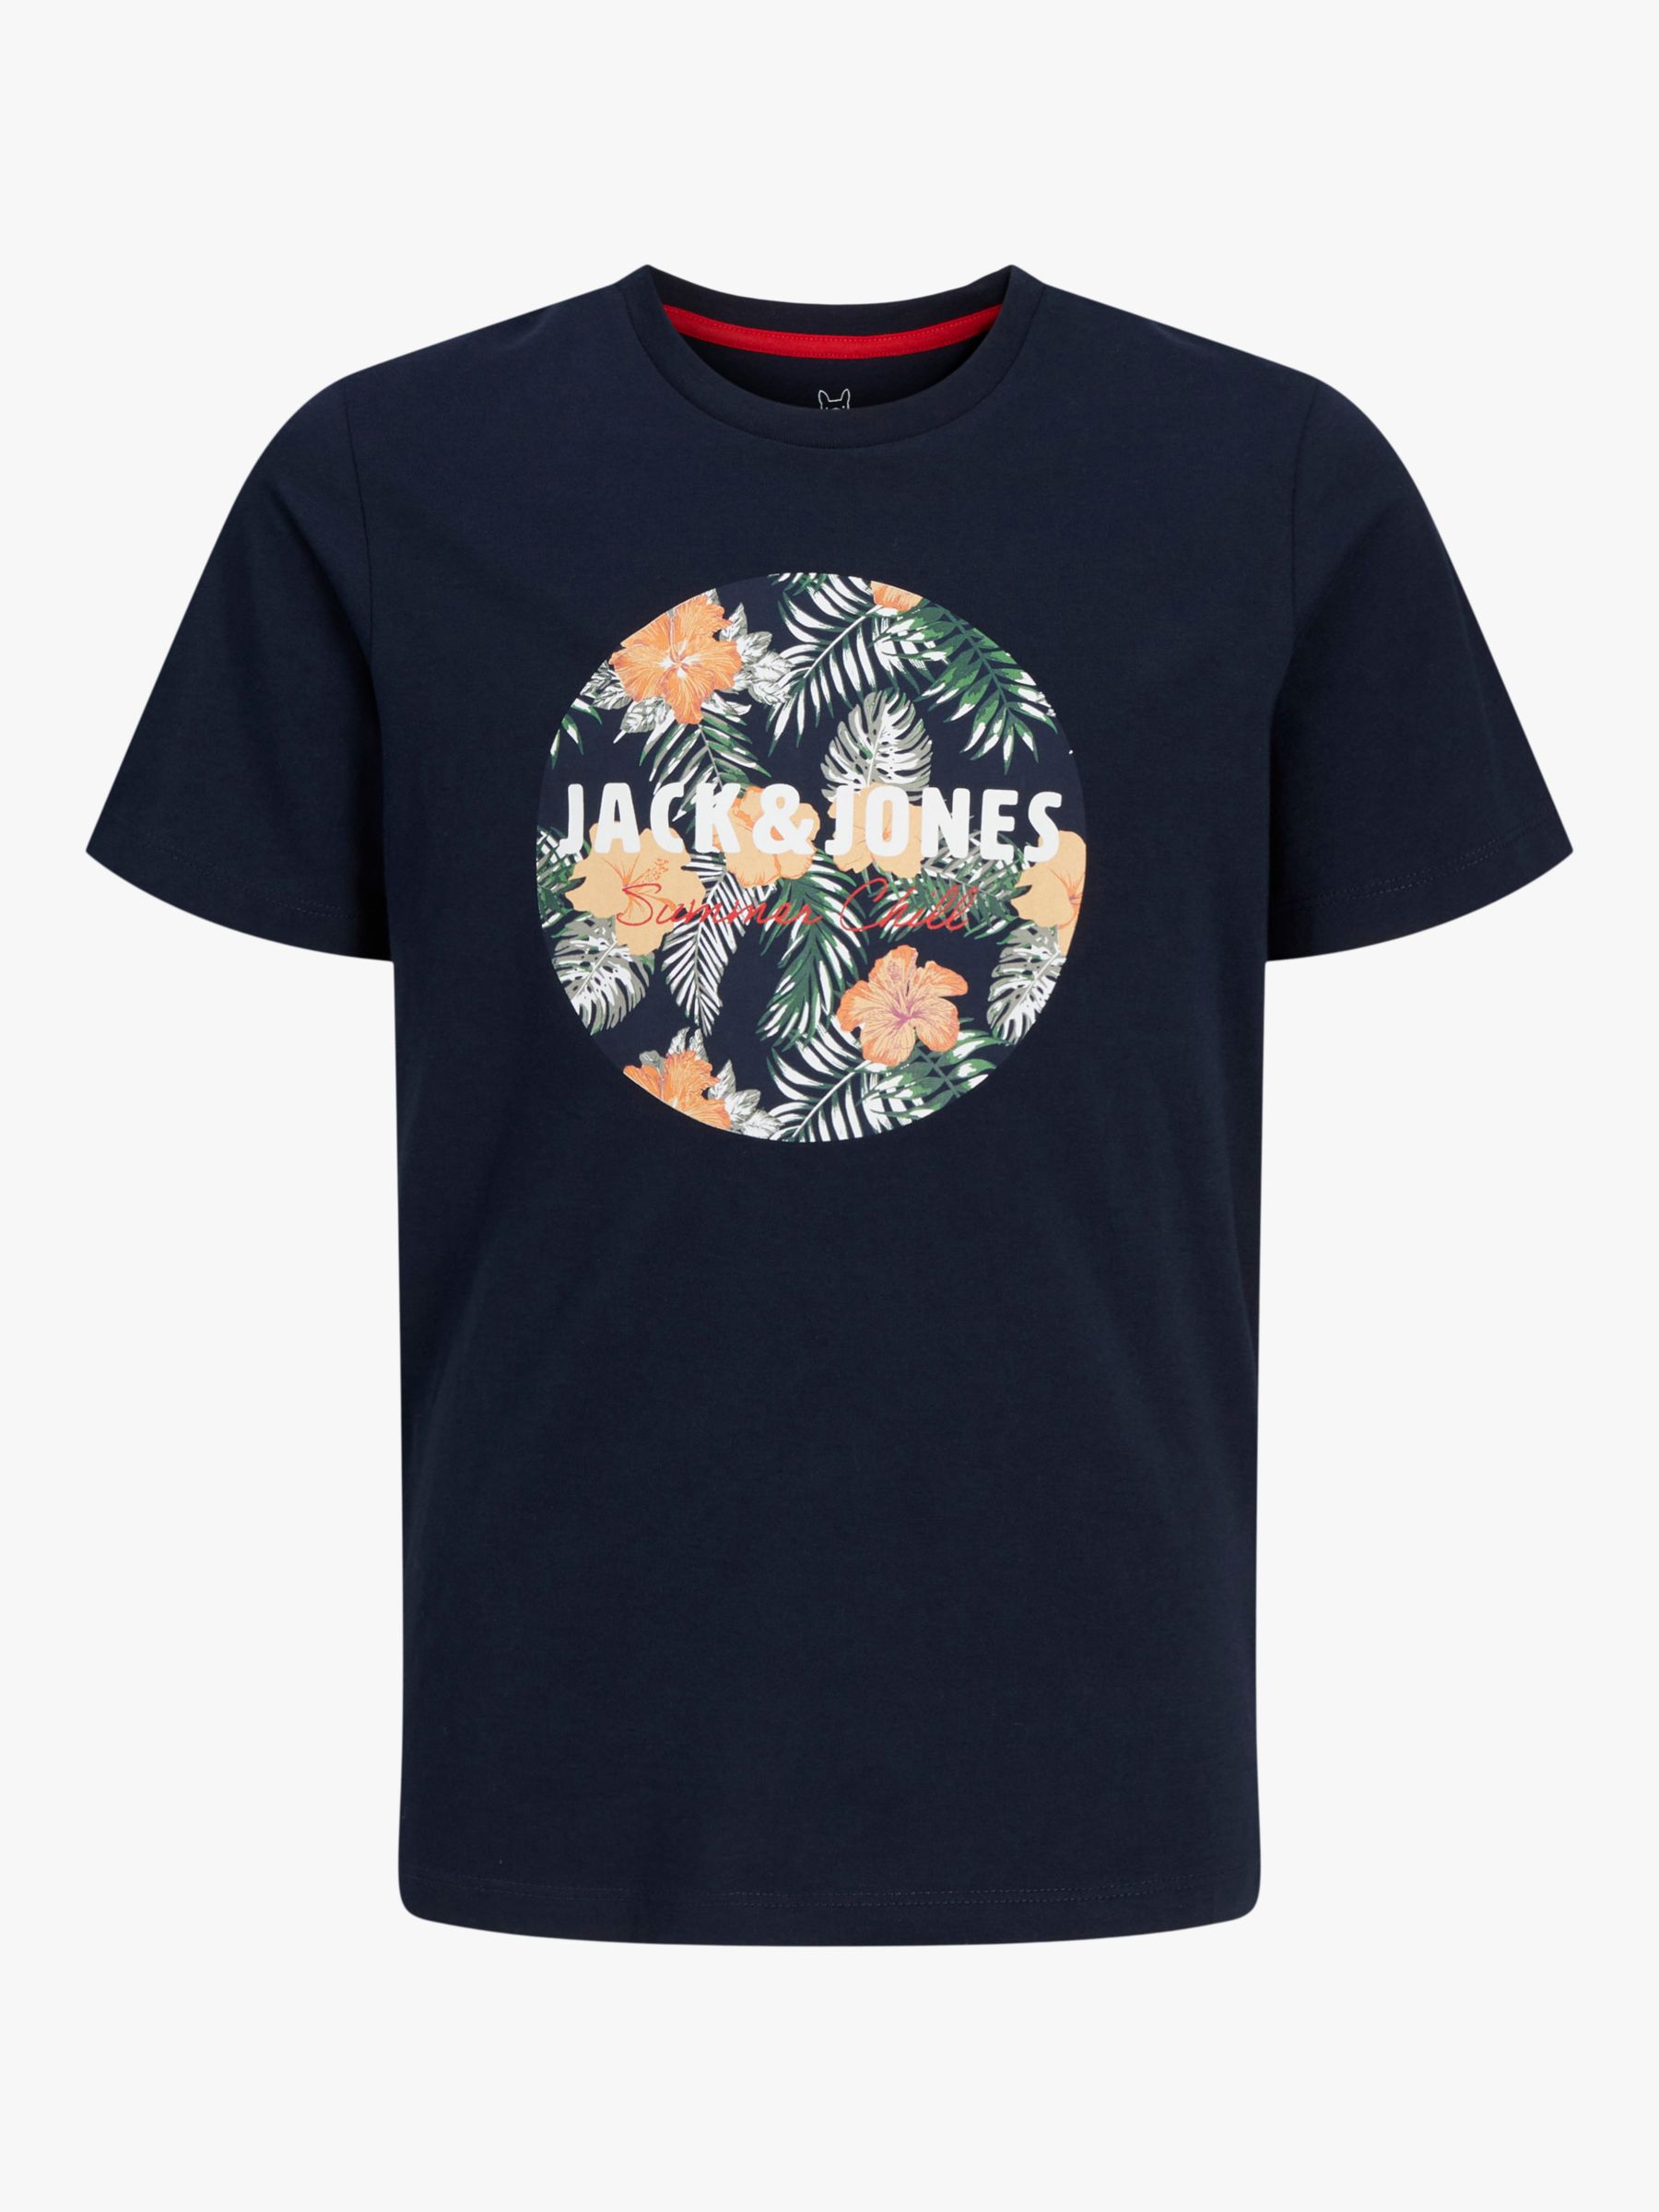 Jack & Jones Kids' Chill Shape Logo Floral Print T-Shirt & Shorts Set, Navy, 16 years